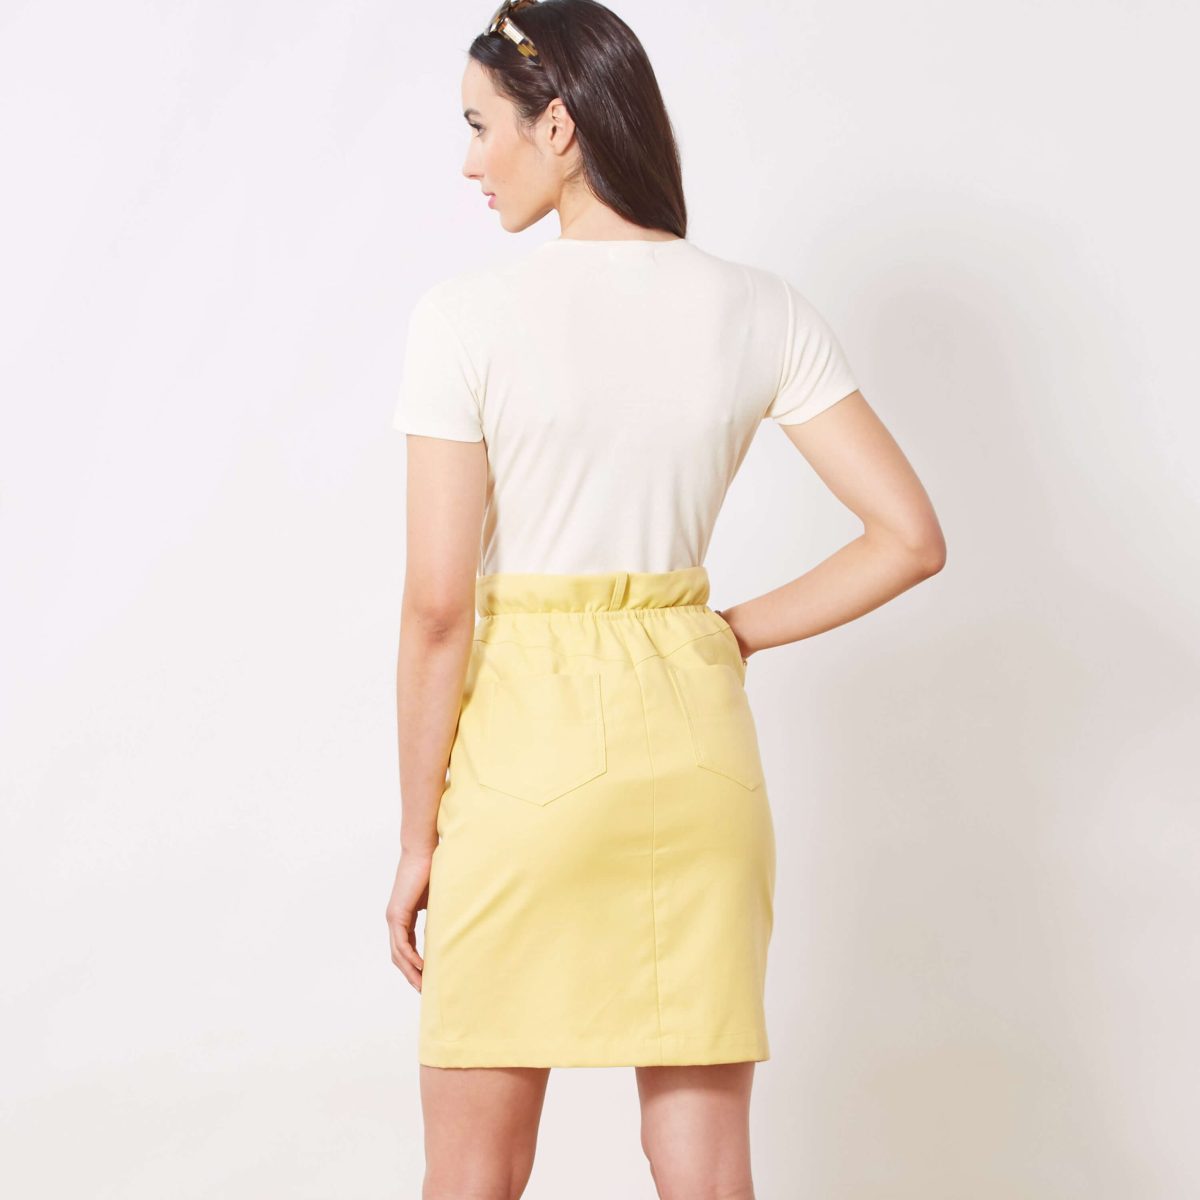 New Look Sewing Pattern N6703 Misses' Skirts